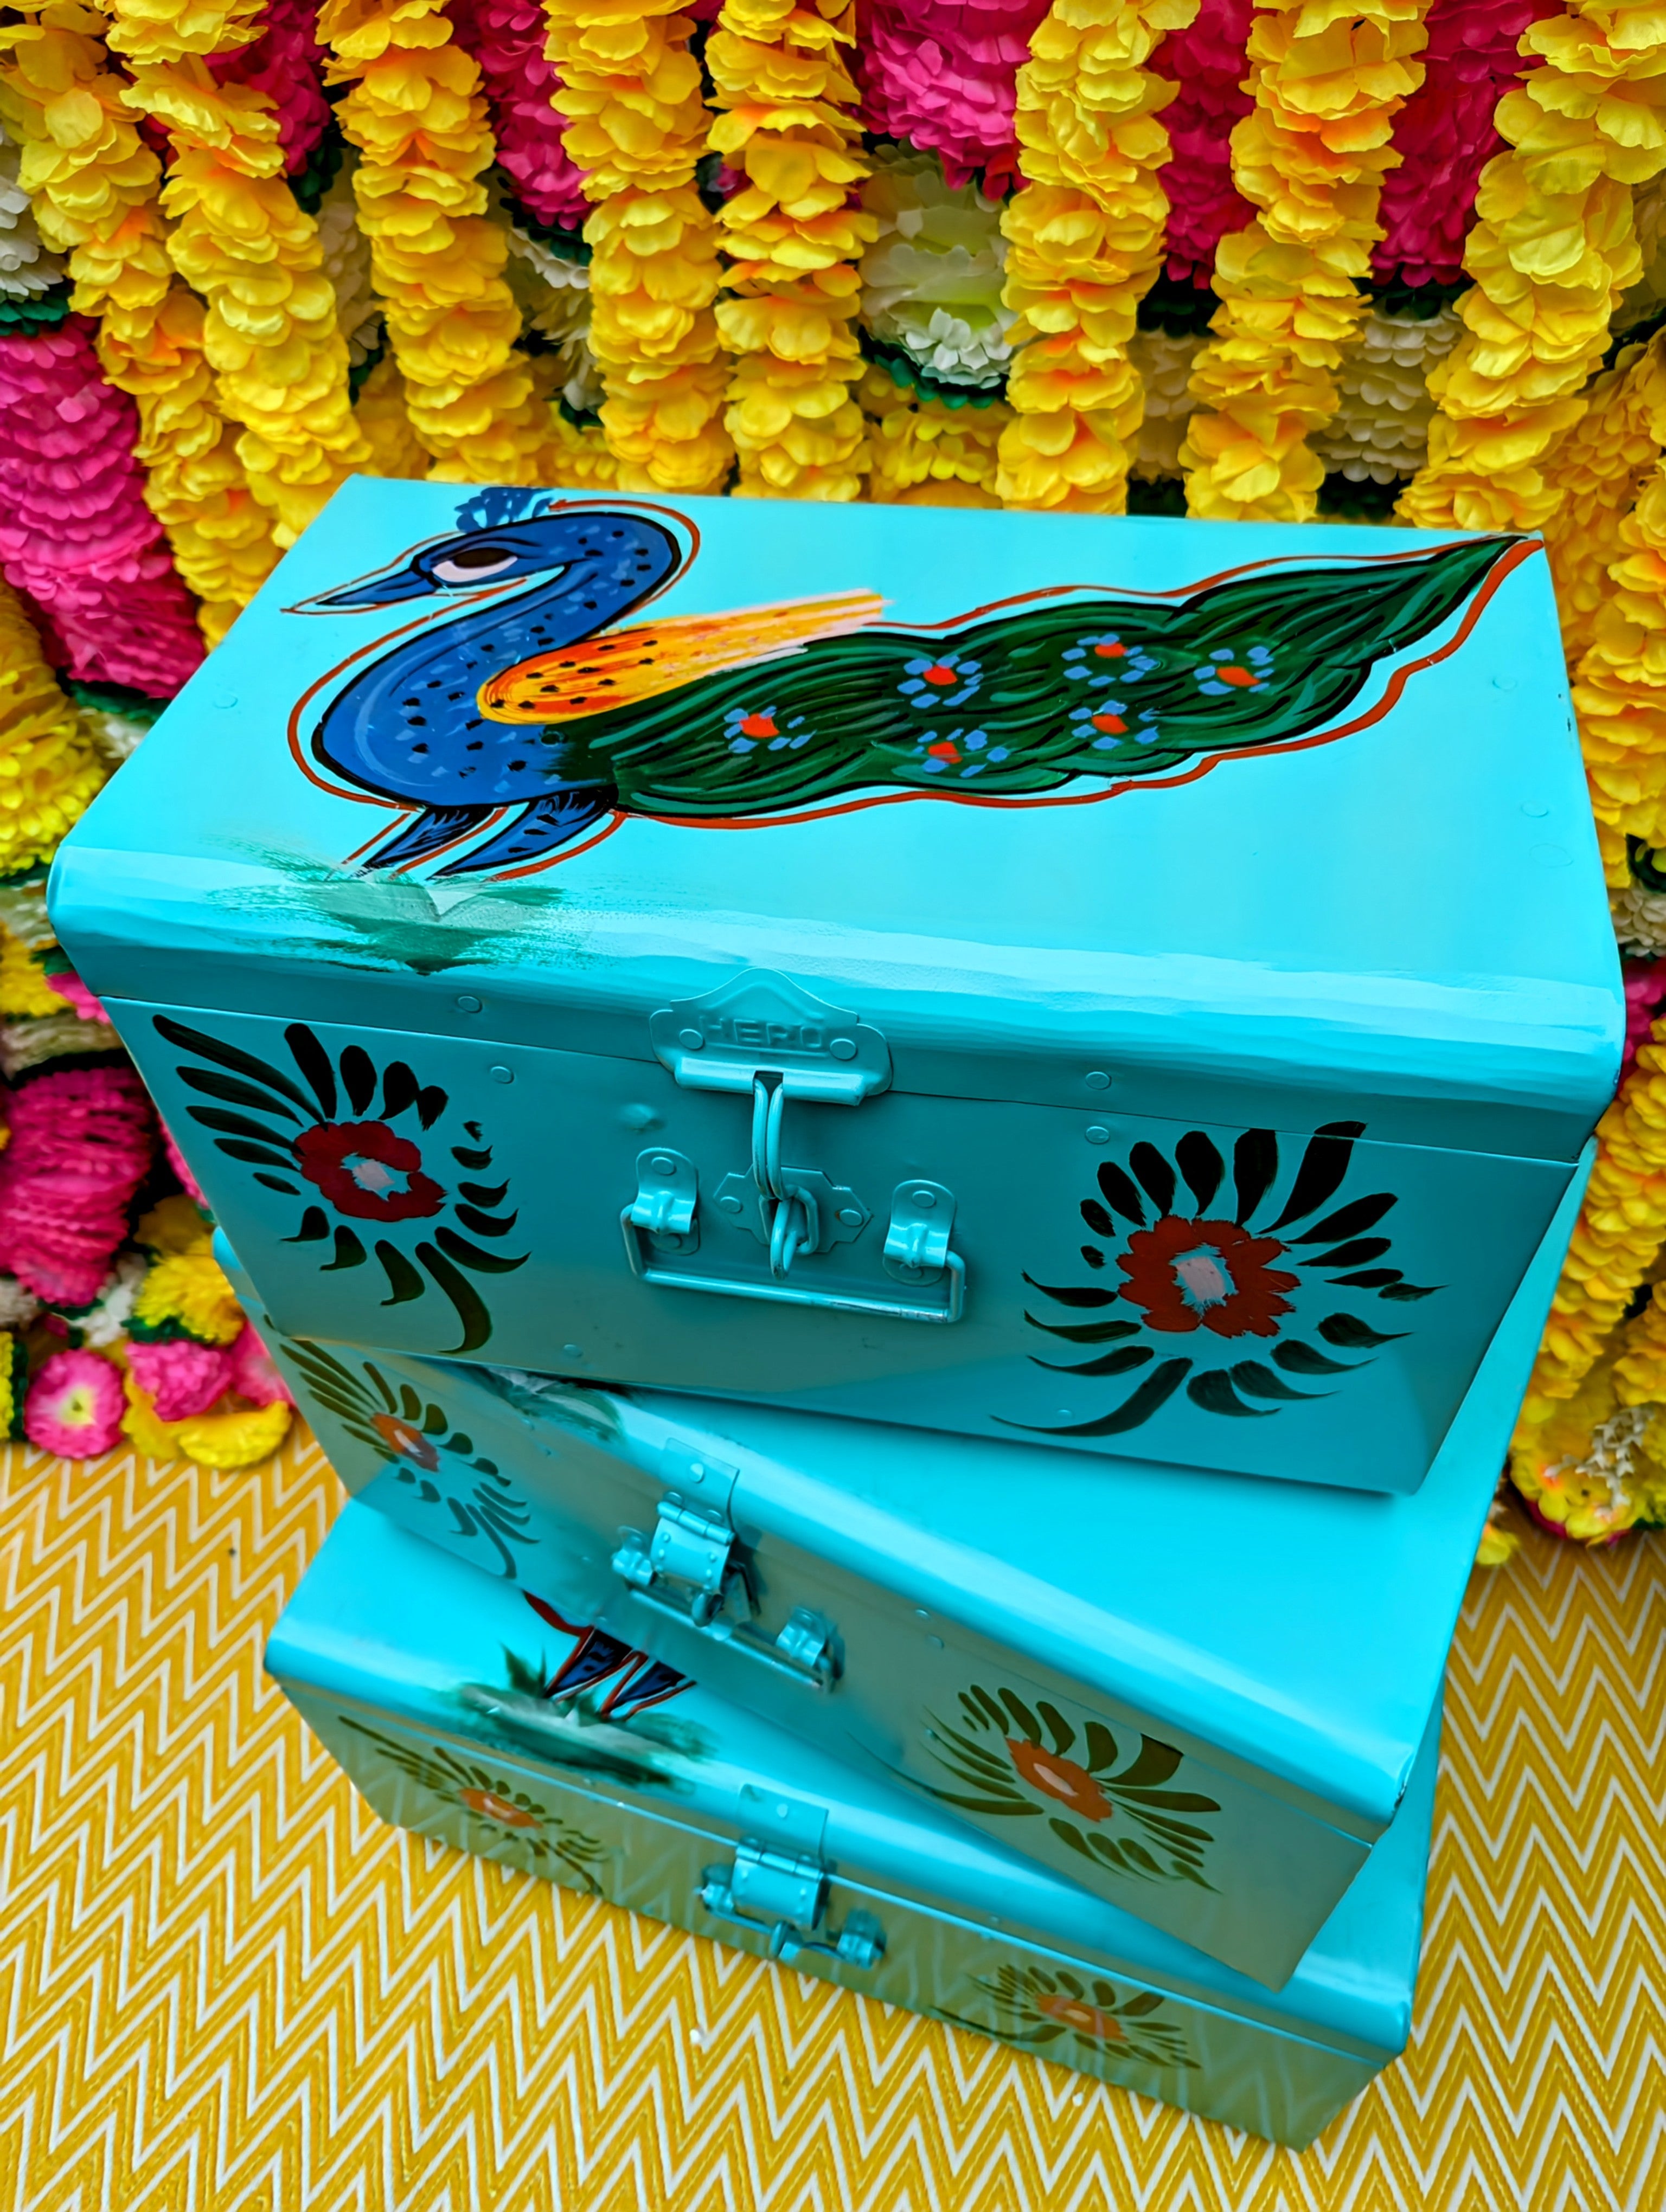 Indian truck art trunks - Peacock